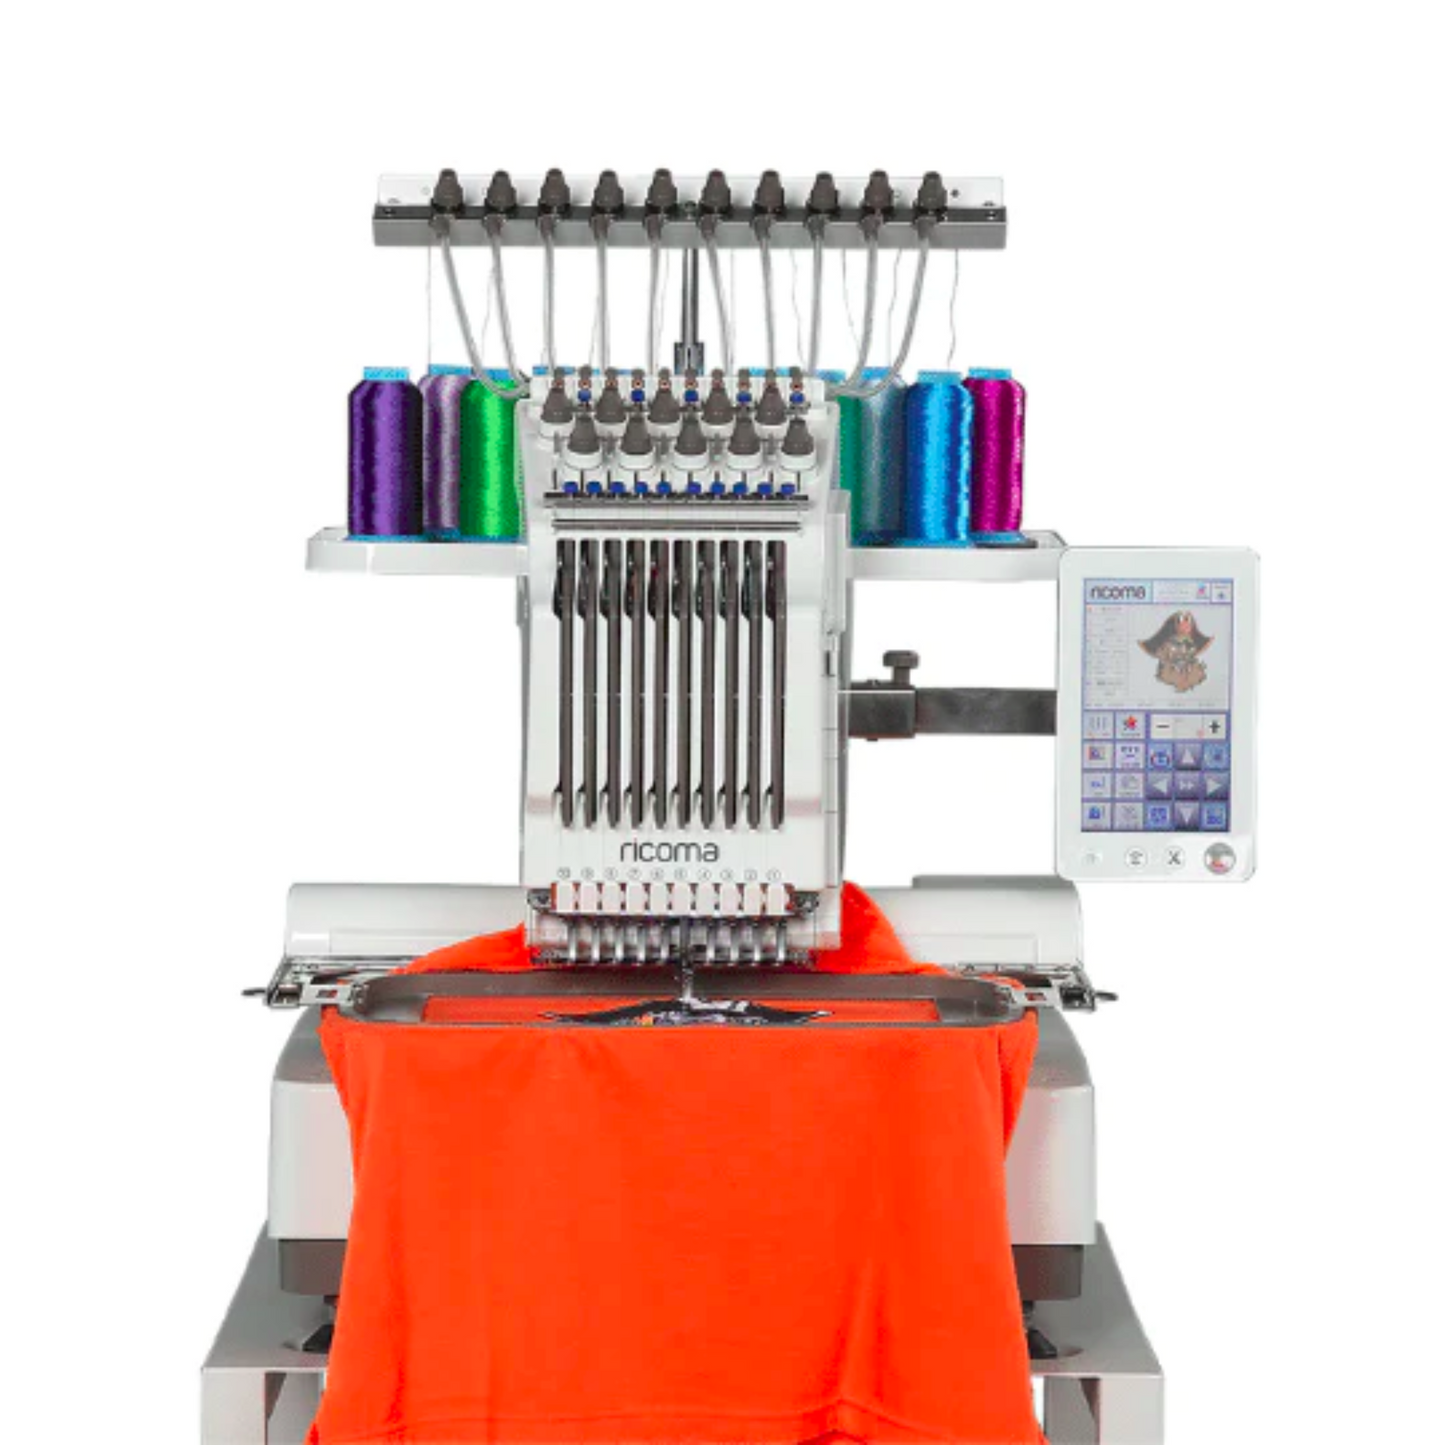 Ricoma EM1010 embroidery sewing machine